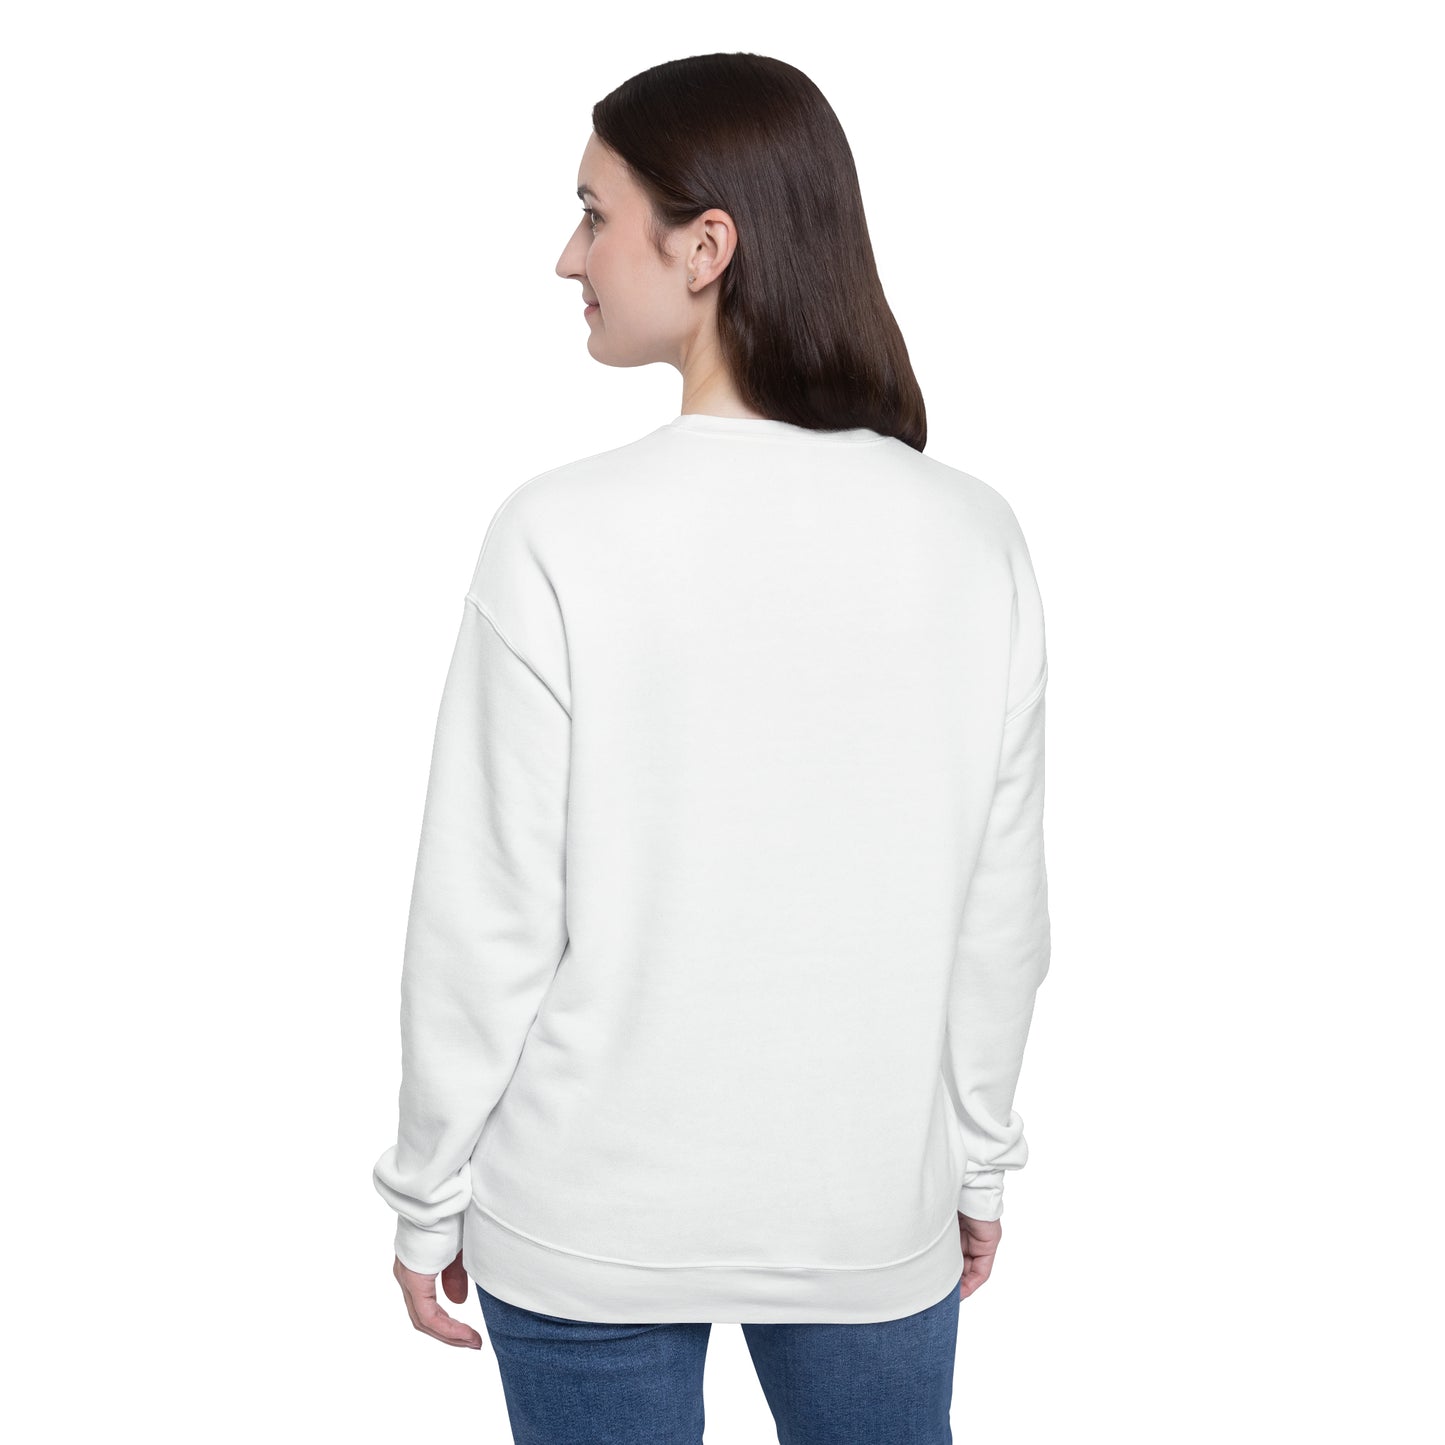 Super Anime Store Authentic Certified Unisex Drop Shoulder Sweatshirt